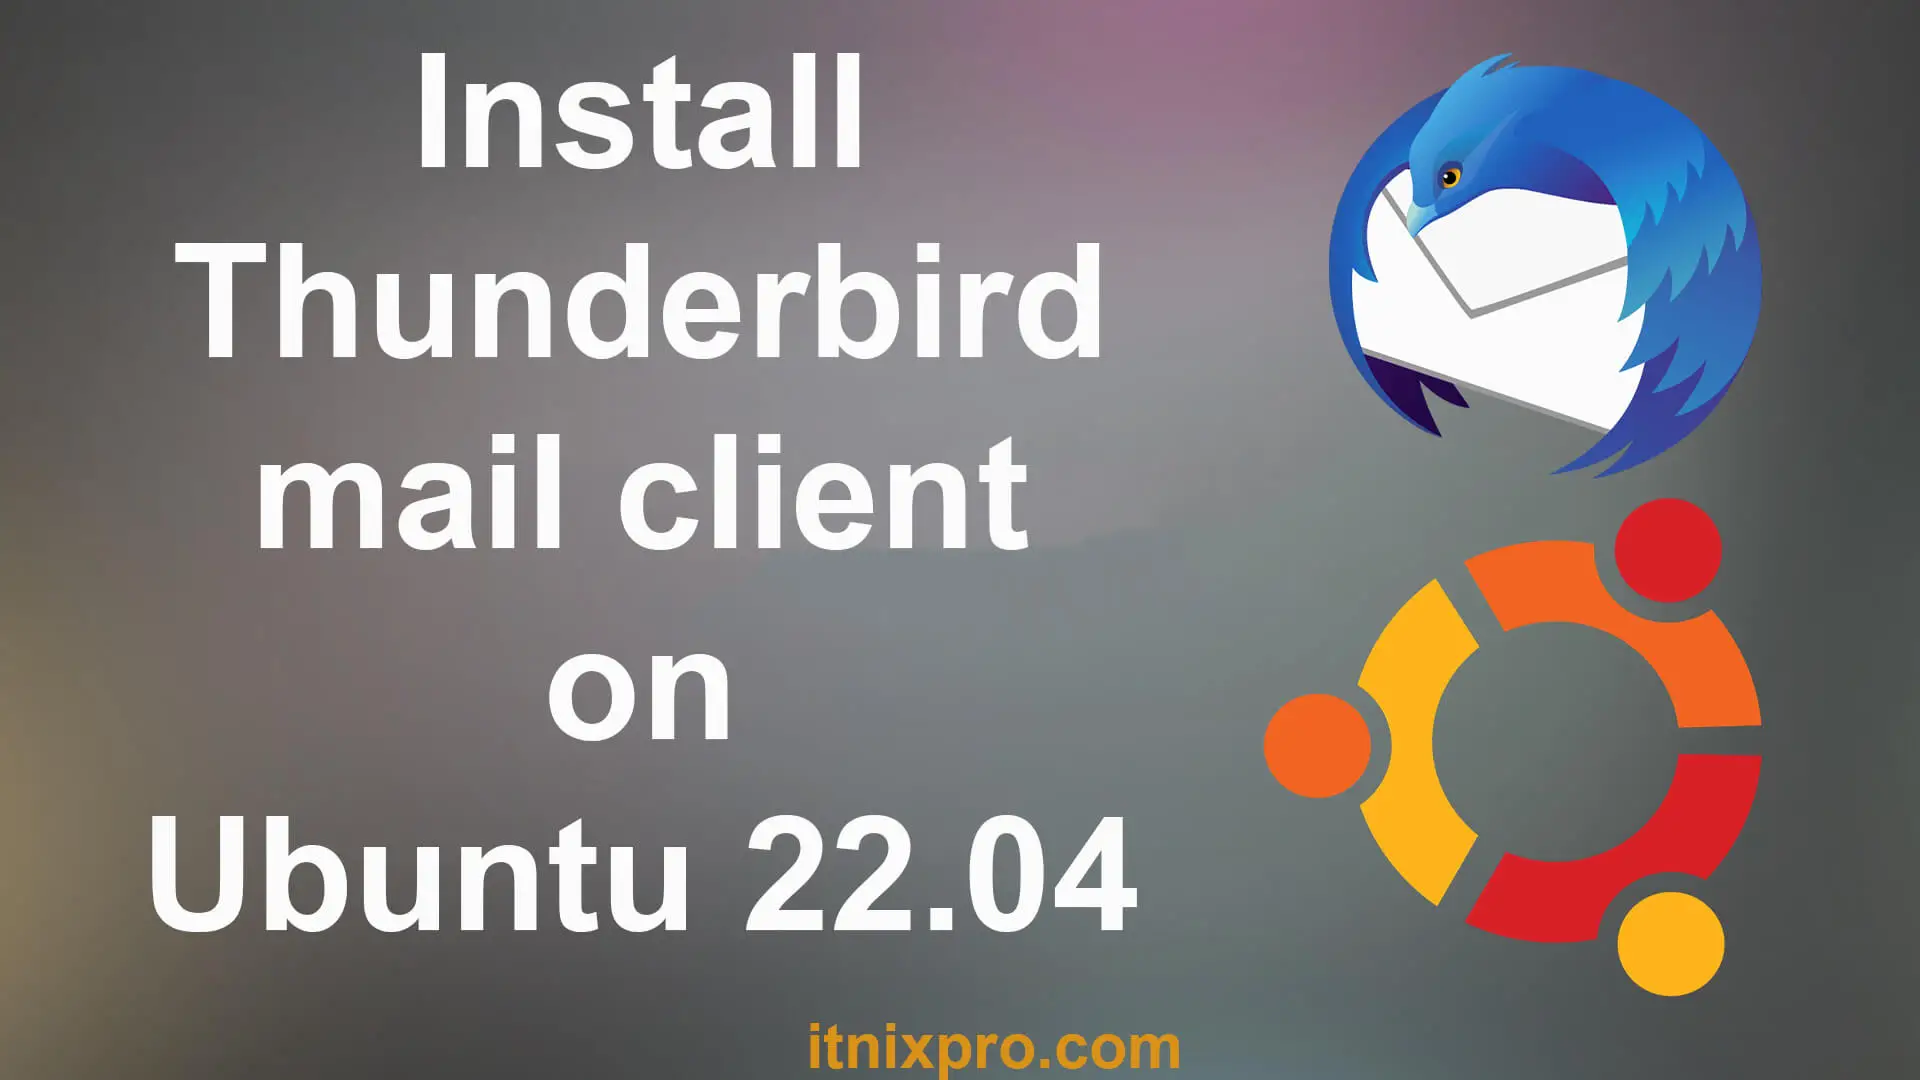 Install Thunderbird mail client on Ubuntu 22.04